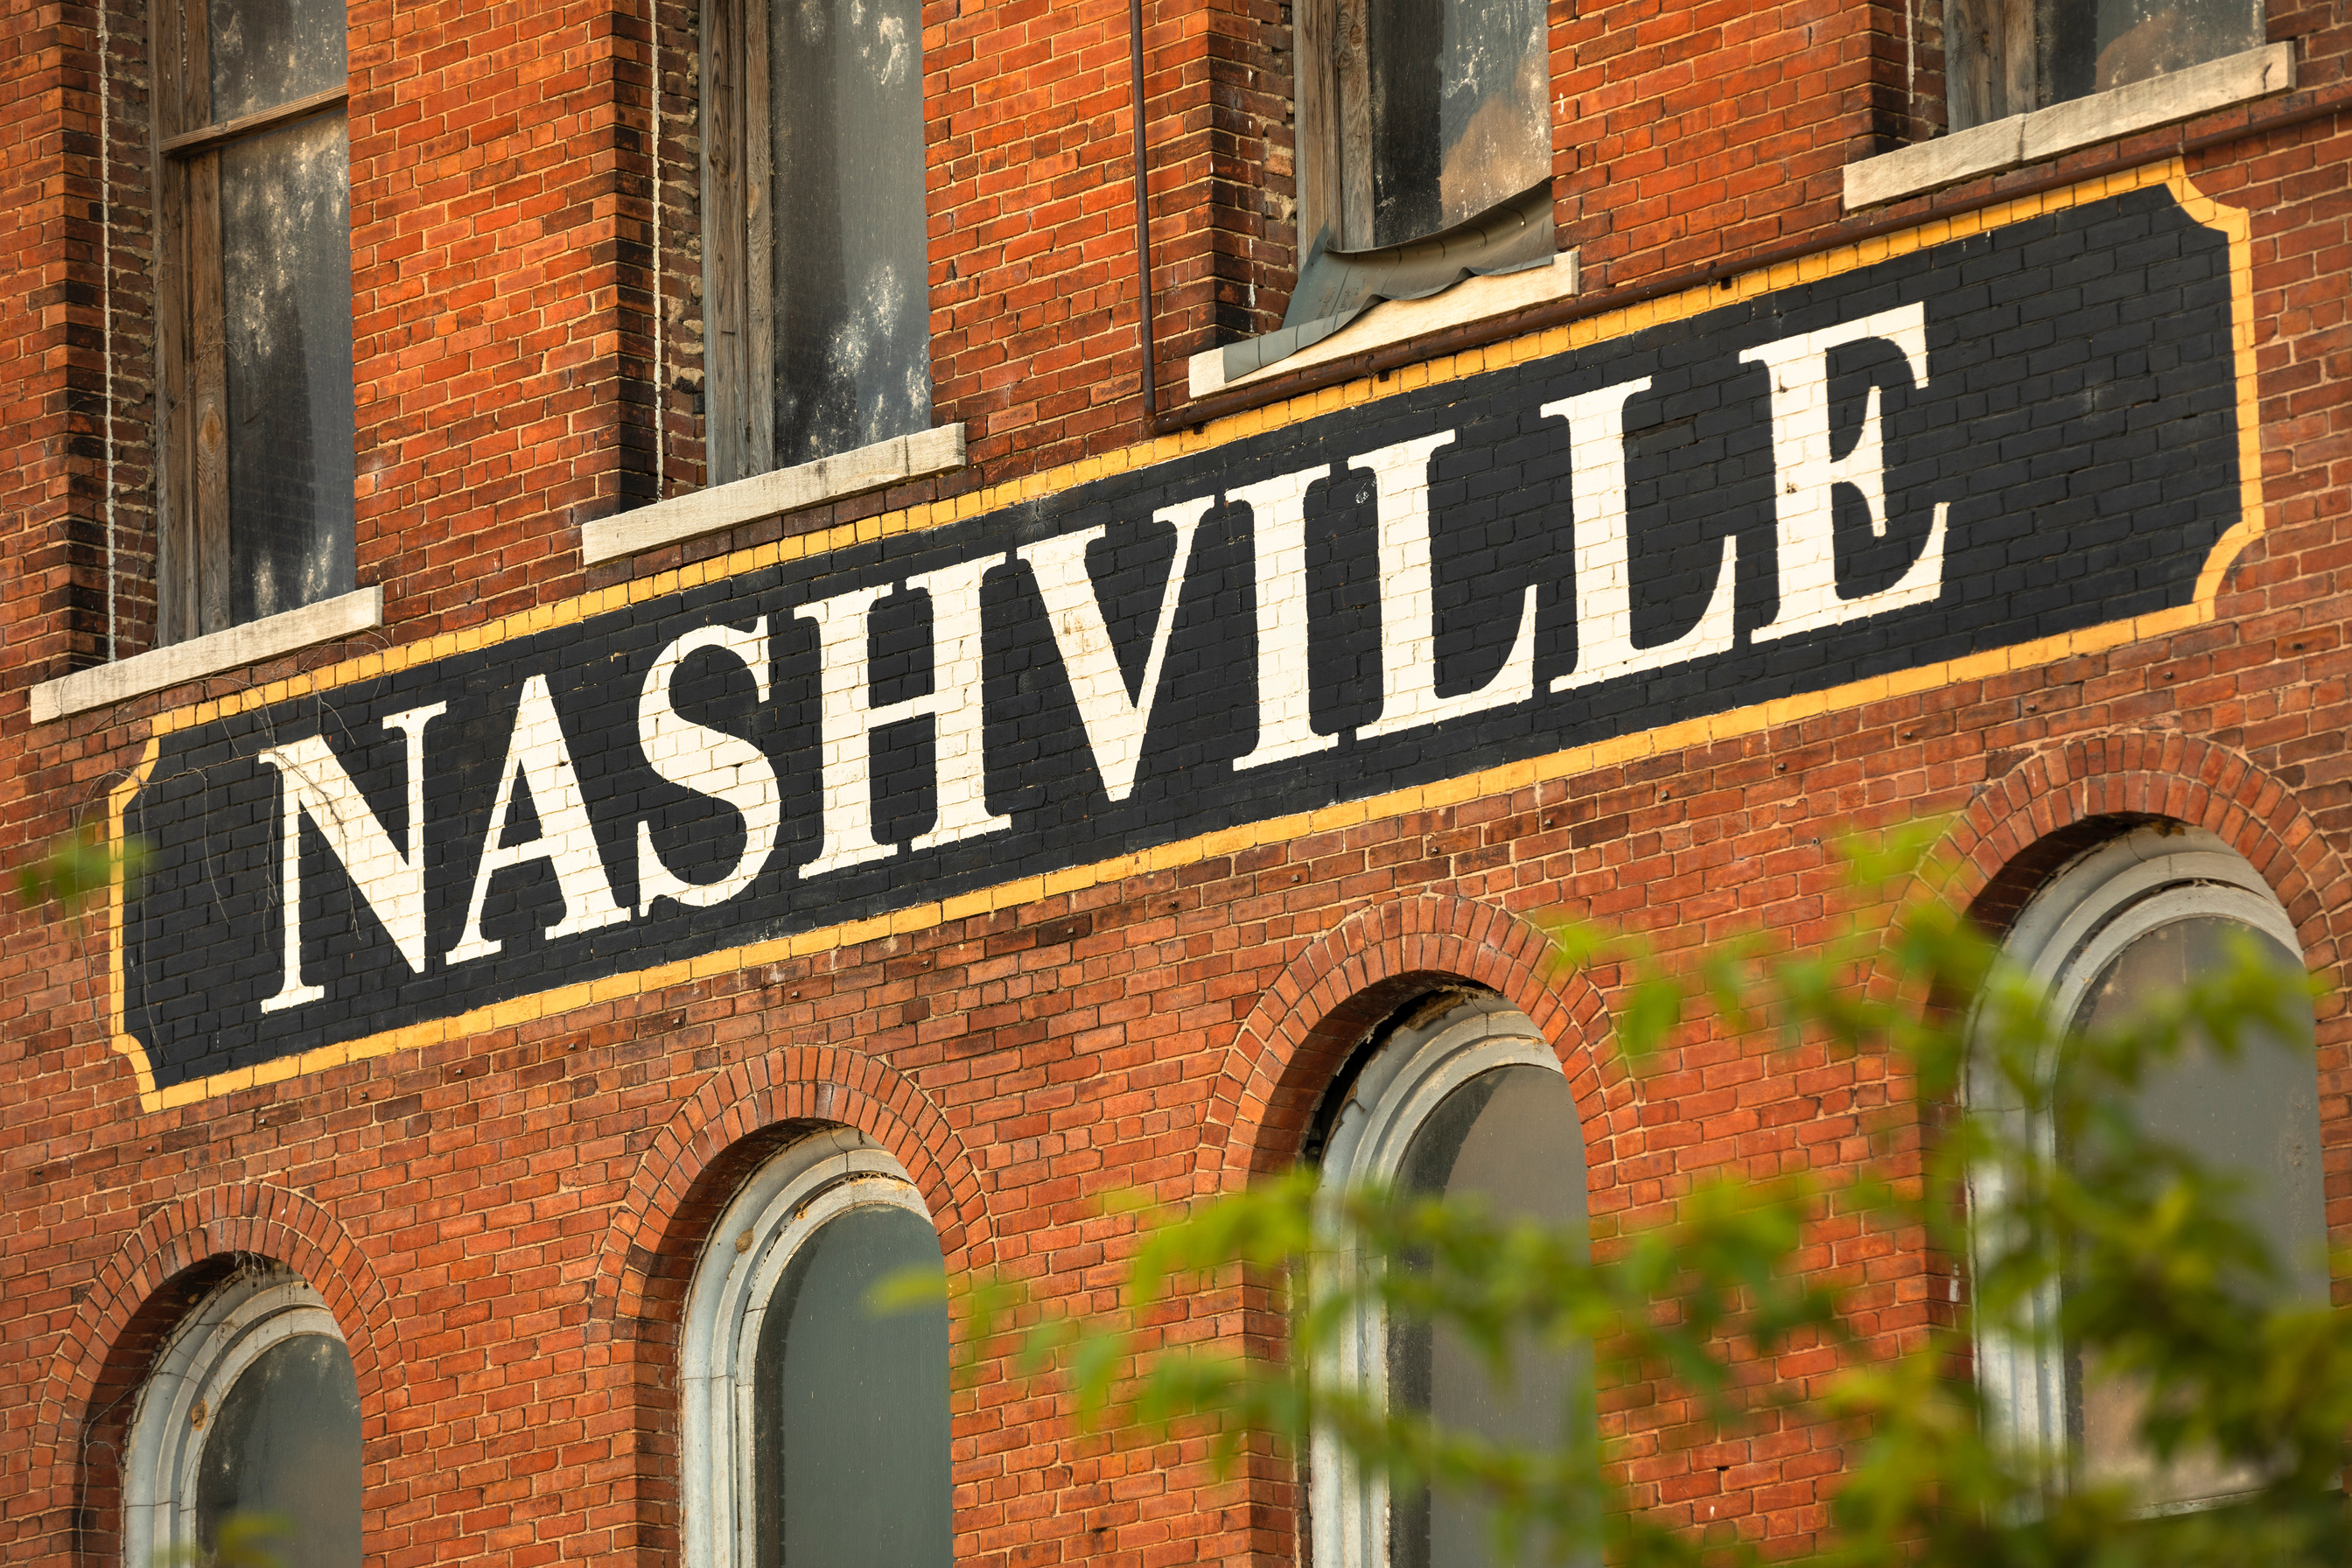 Nashville Tennessee USA city sign